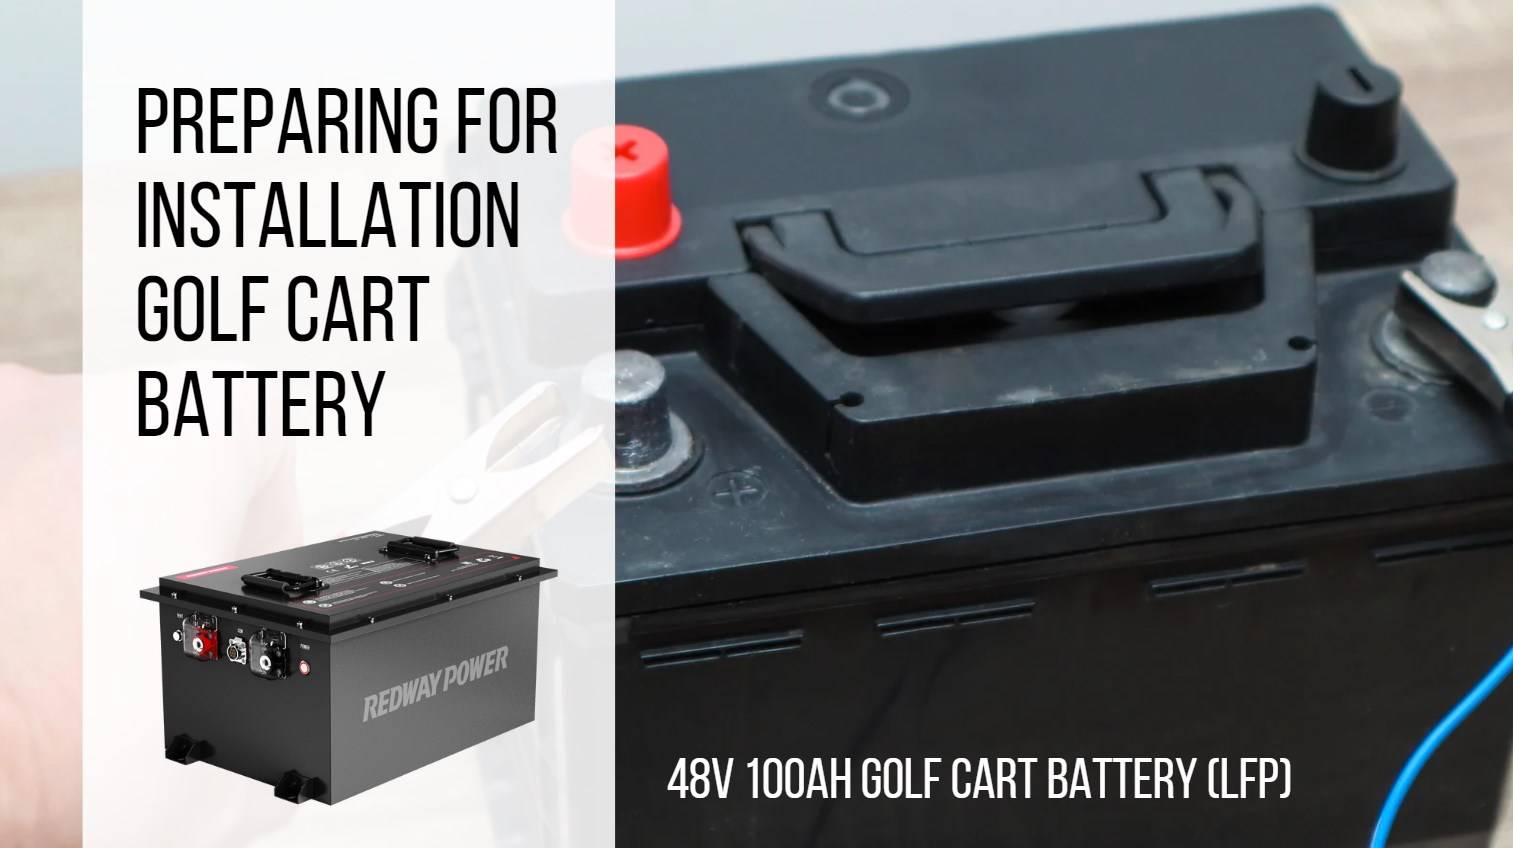 Preparing for Installation GOLF CART BATTERY. Install Lithium Batteries in Golf Carts. 48v 100ah golf cart lfp battery